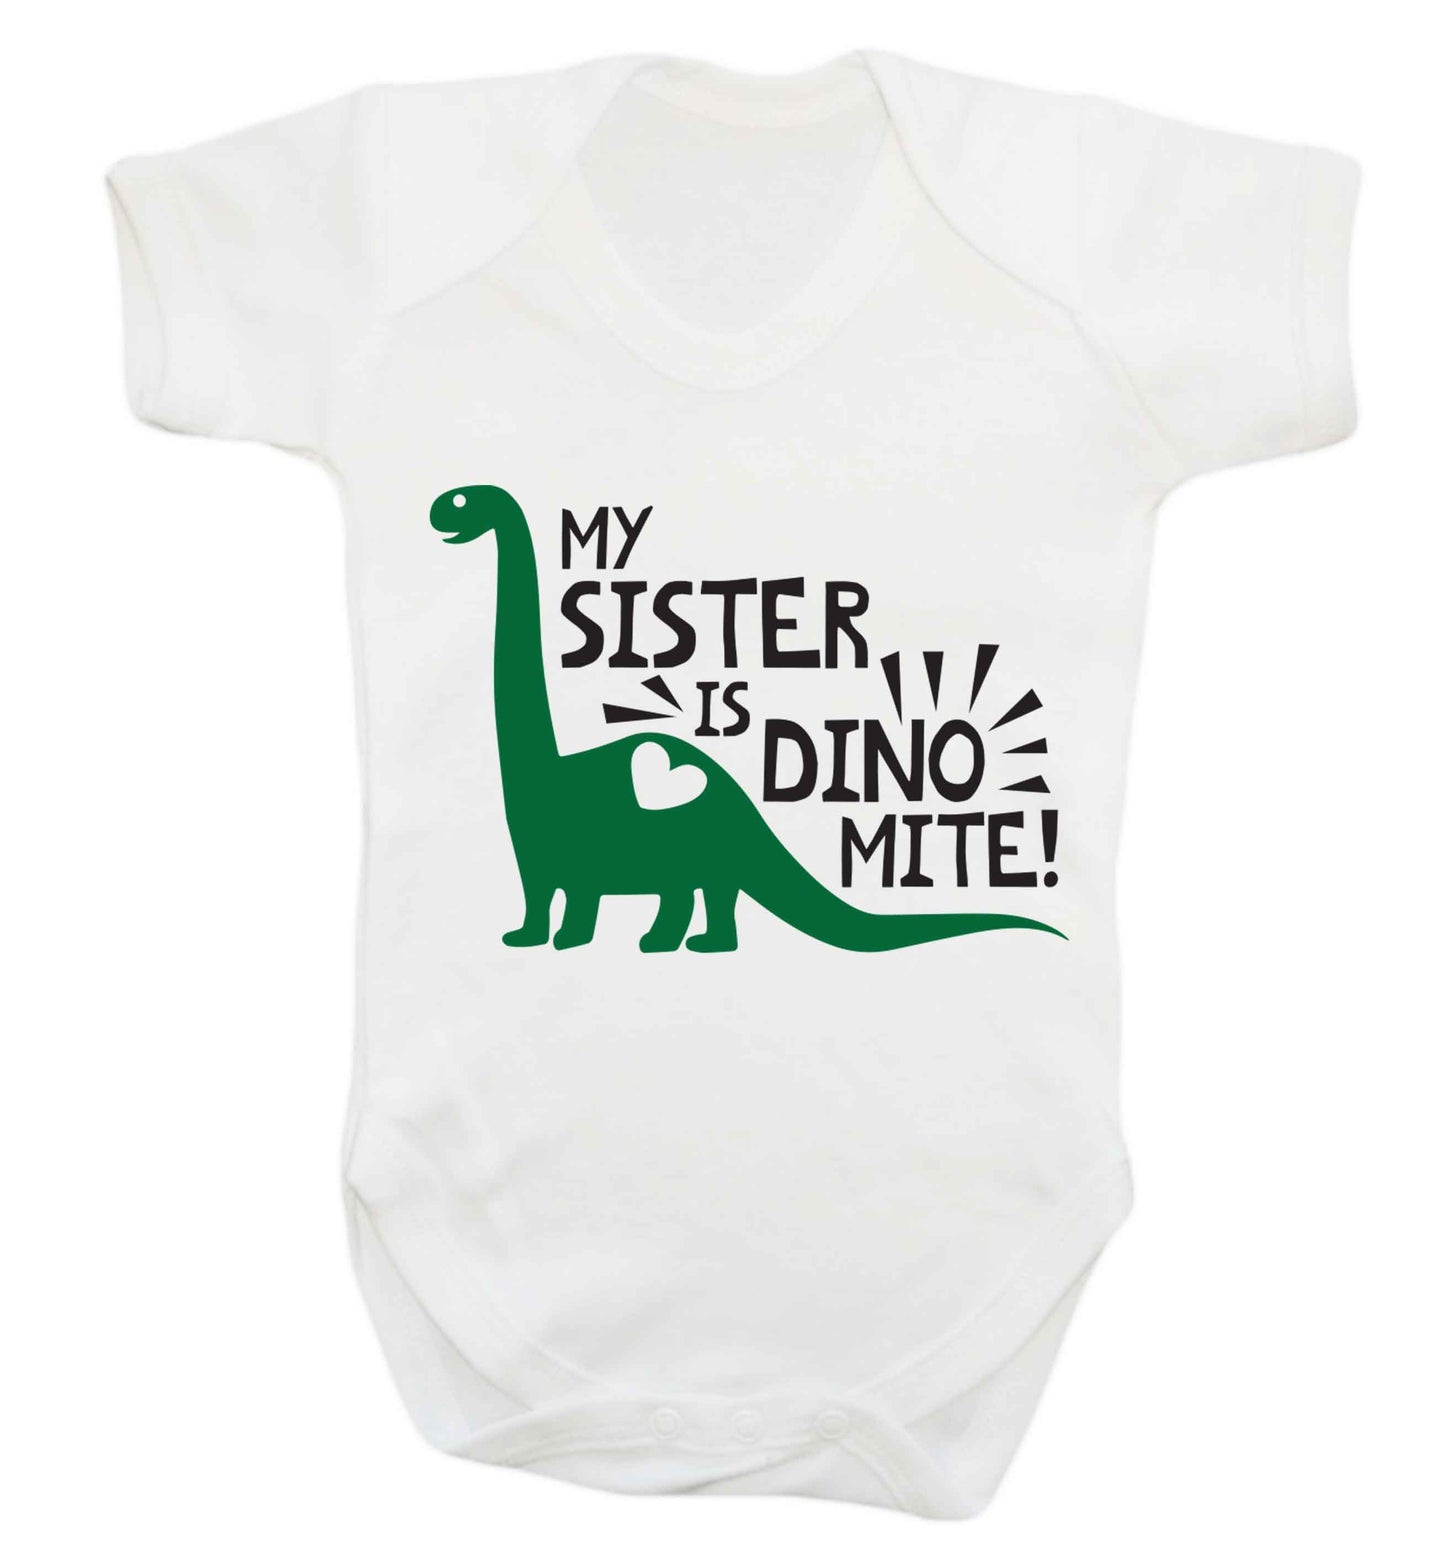 My sister is dinomite! Baby Vest white 18-24 months